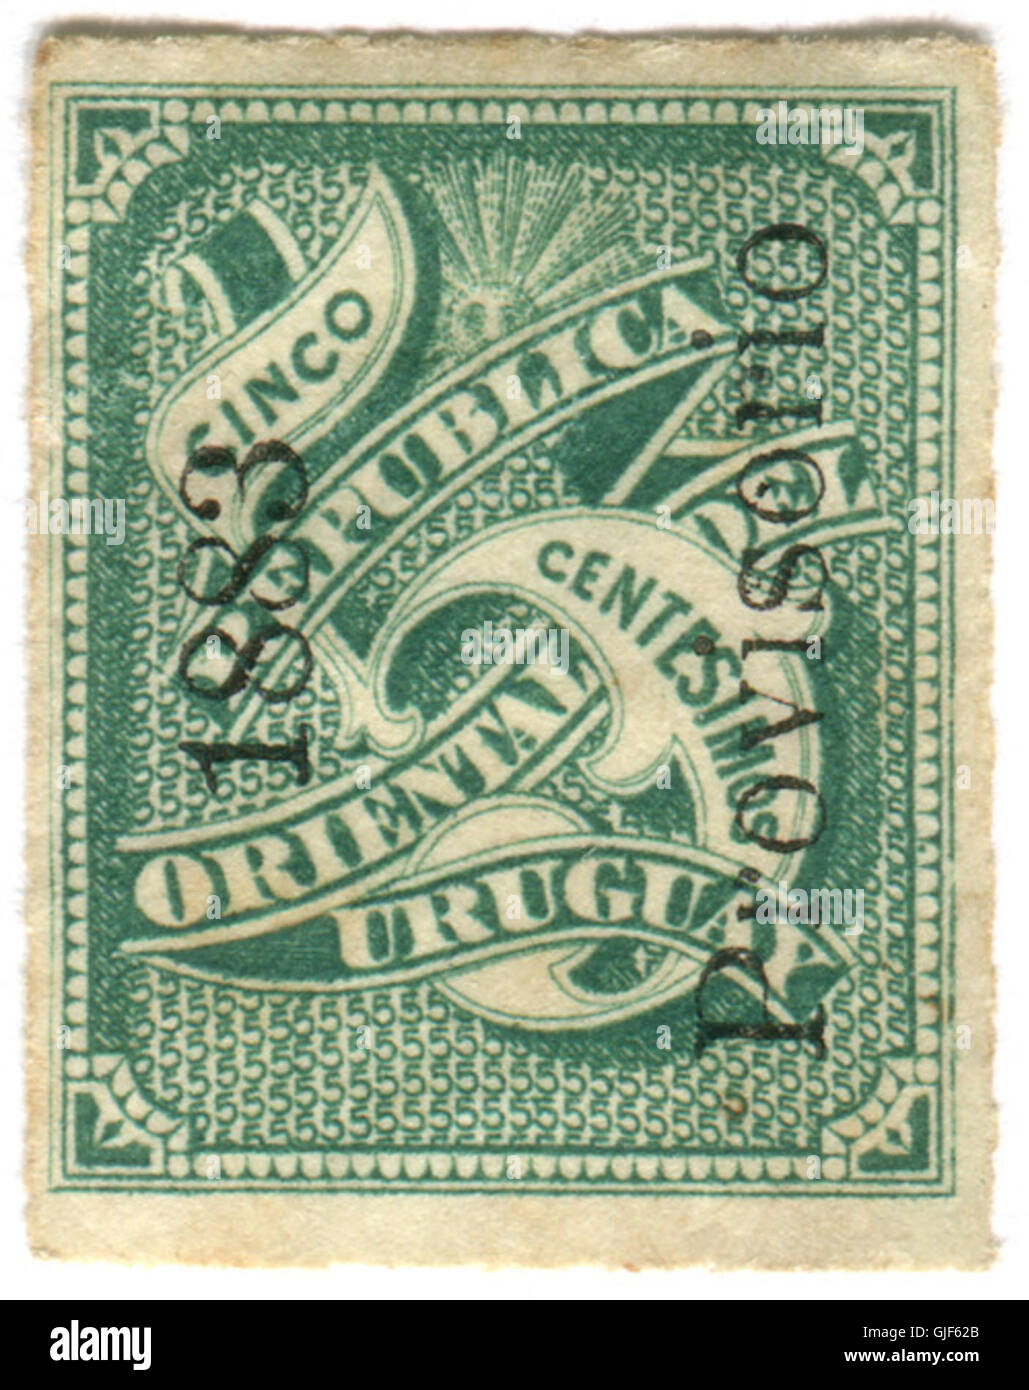 1883-Stempel von Uruguay Stockfoto